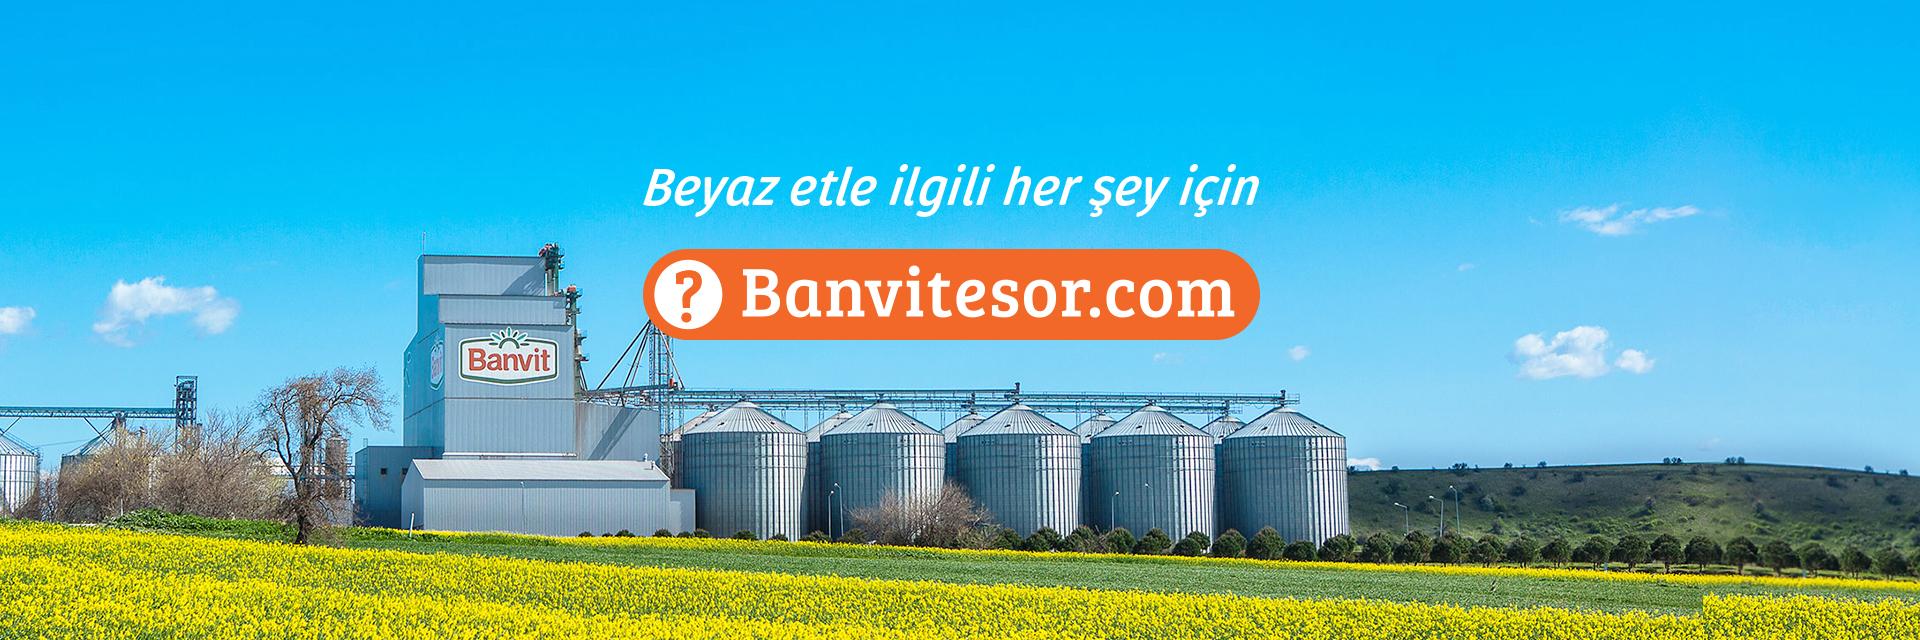 banvitesor-banner